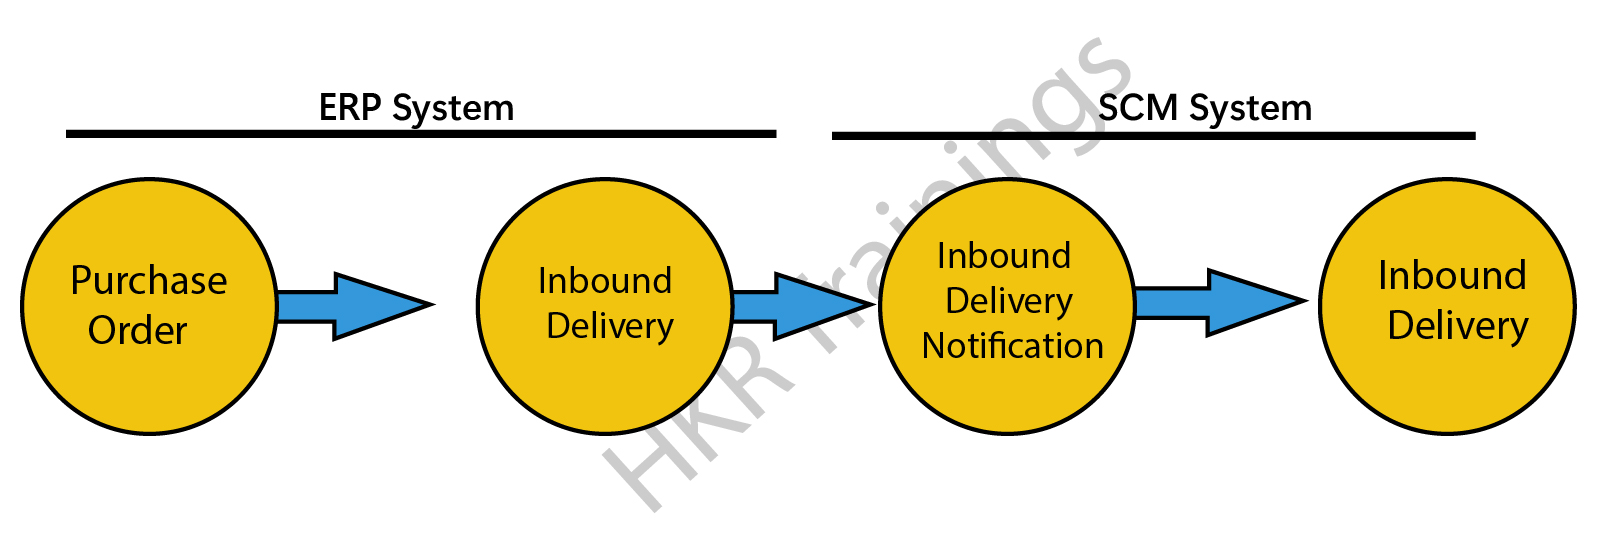  inbound delivery process flow